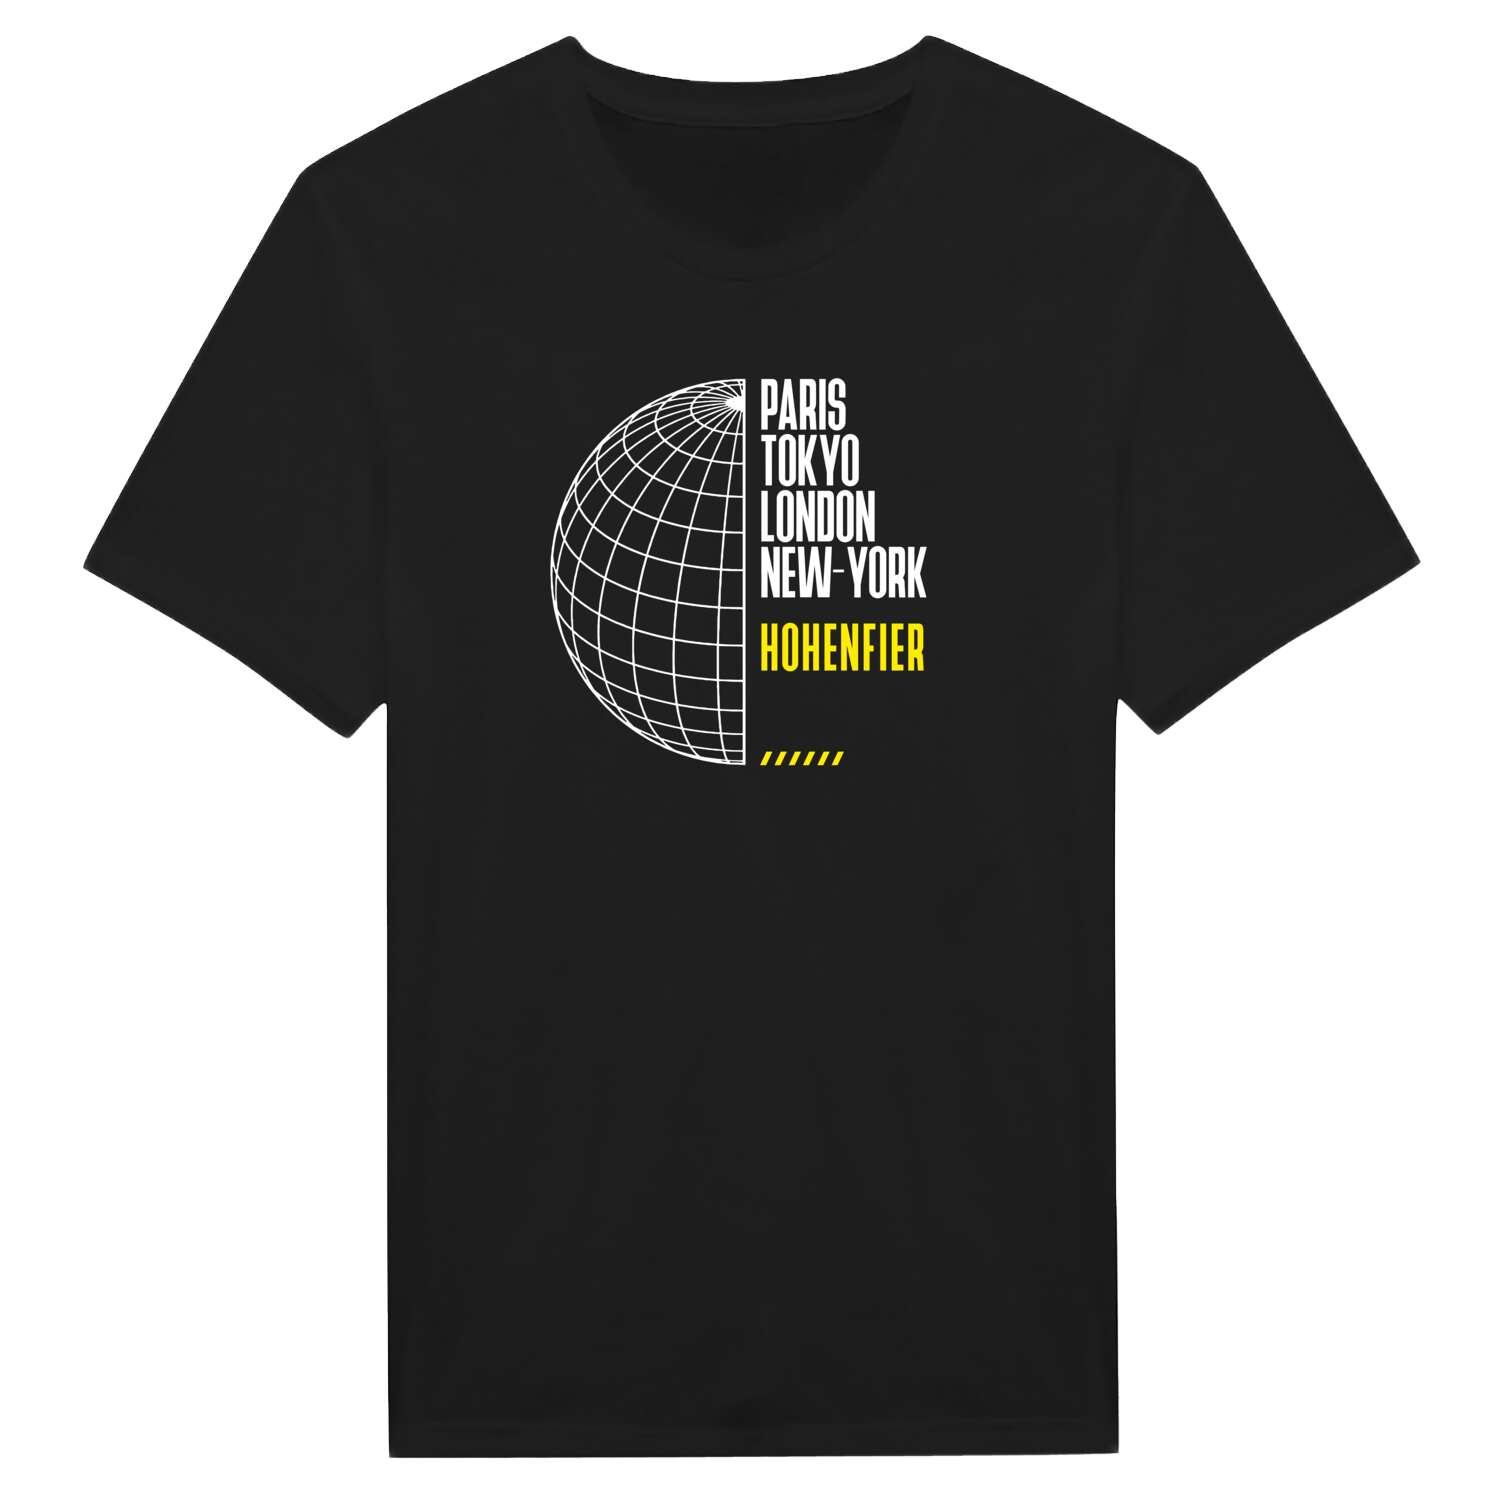 Hohenfier T-Shirt »Paris Tokyo London«